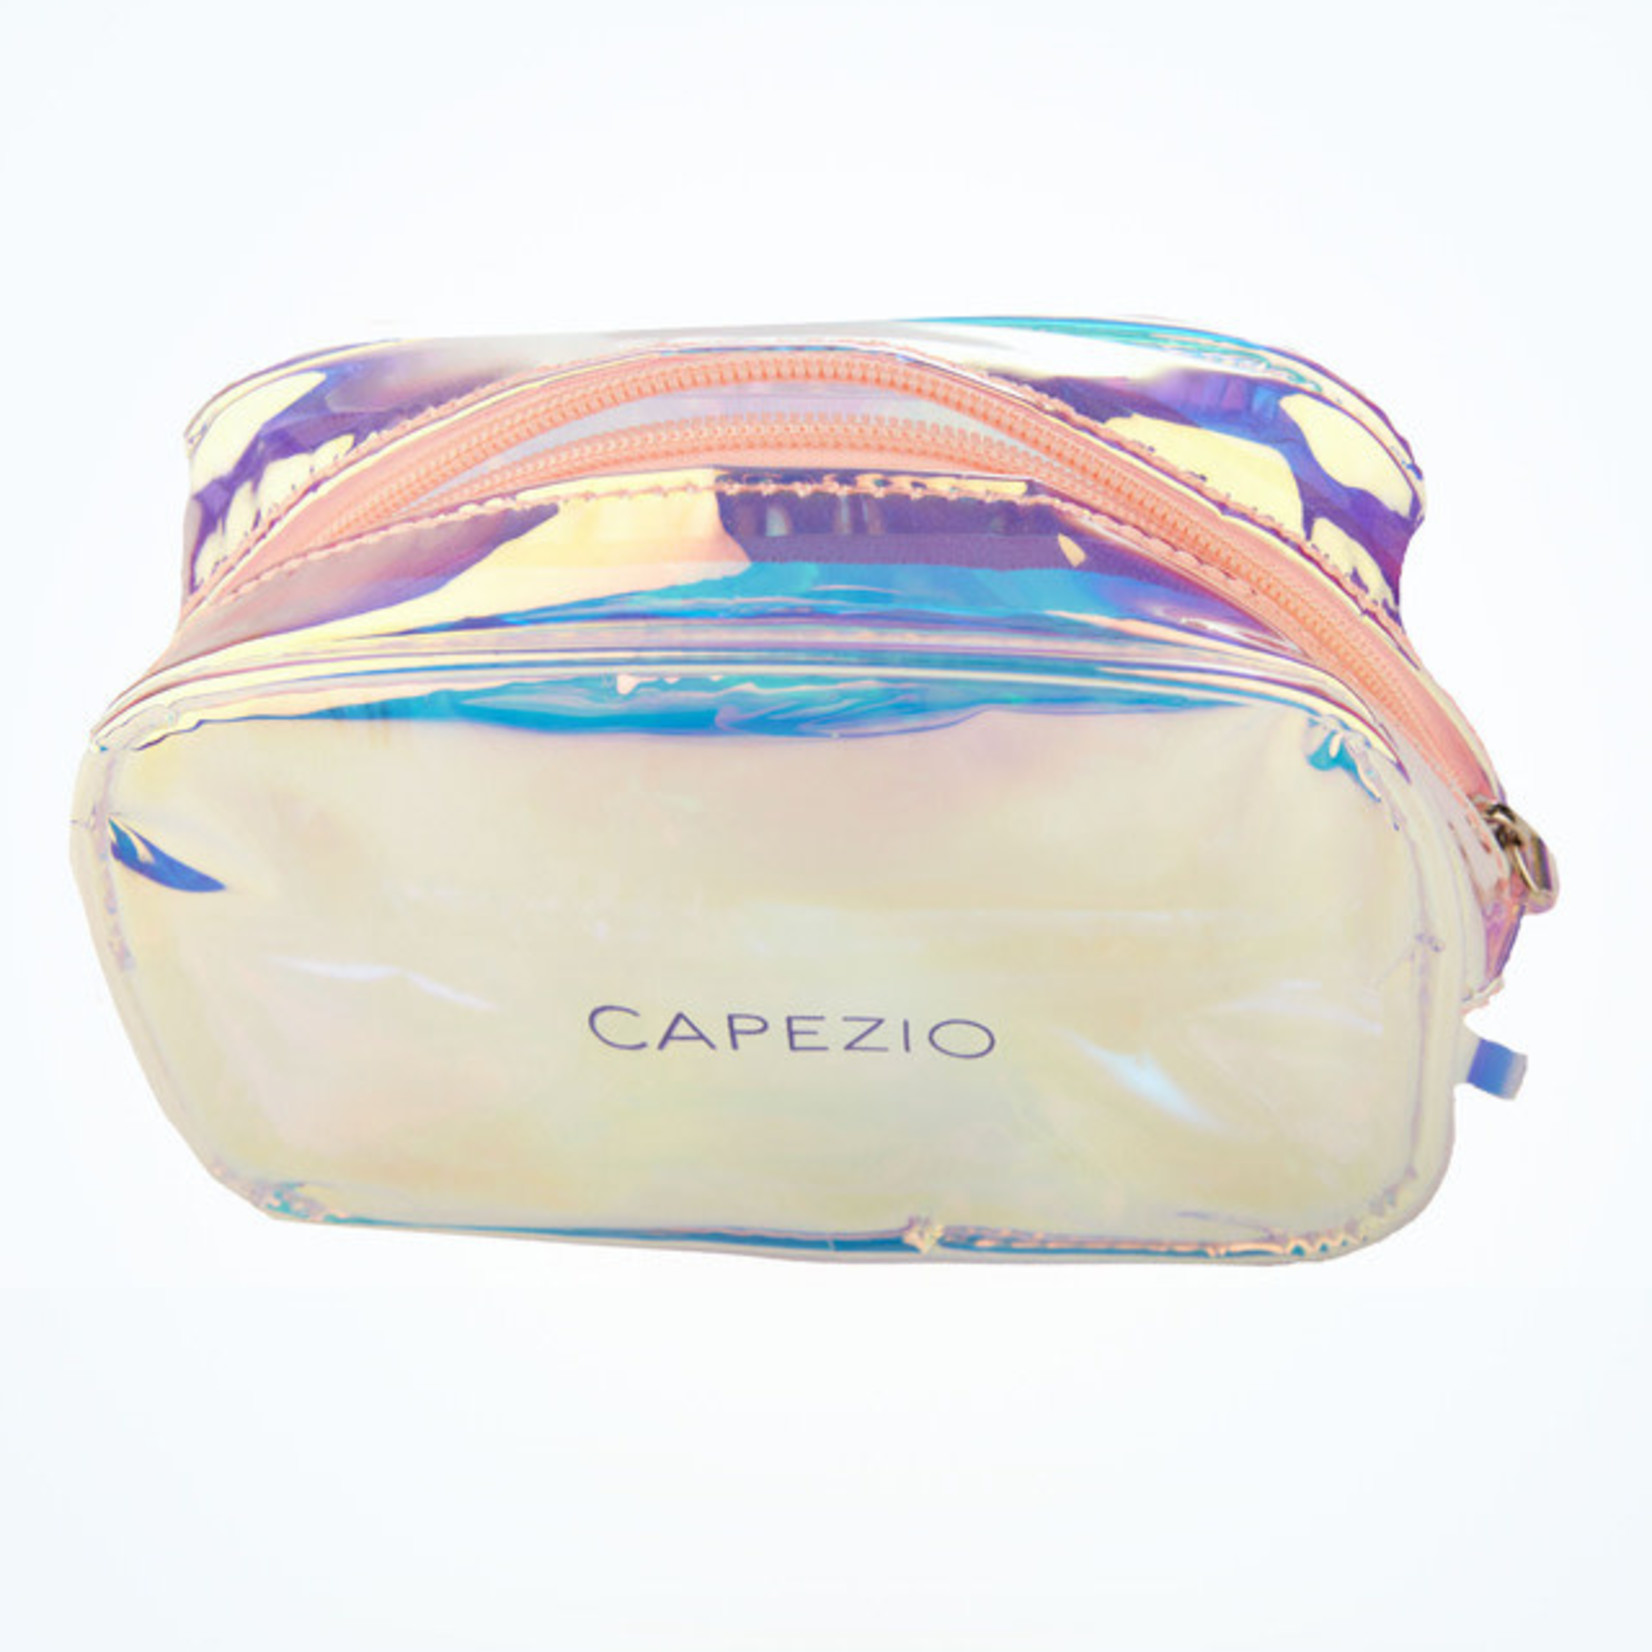 Capezio Capezio B226 Holographic Makeup Bag